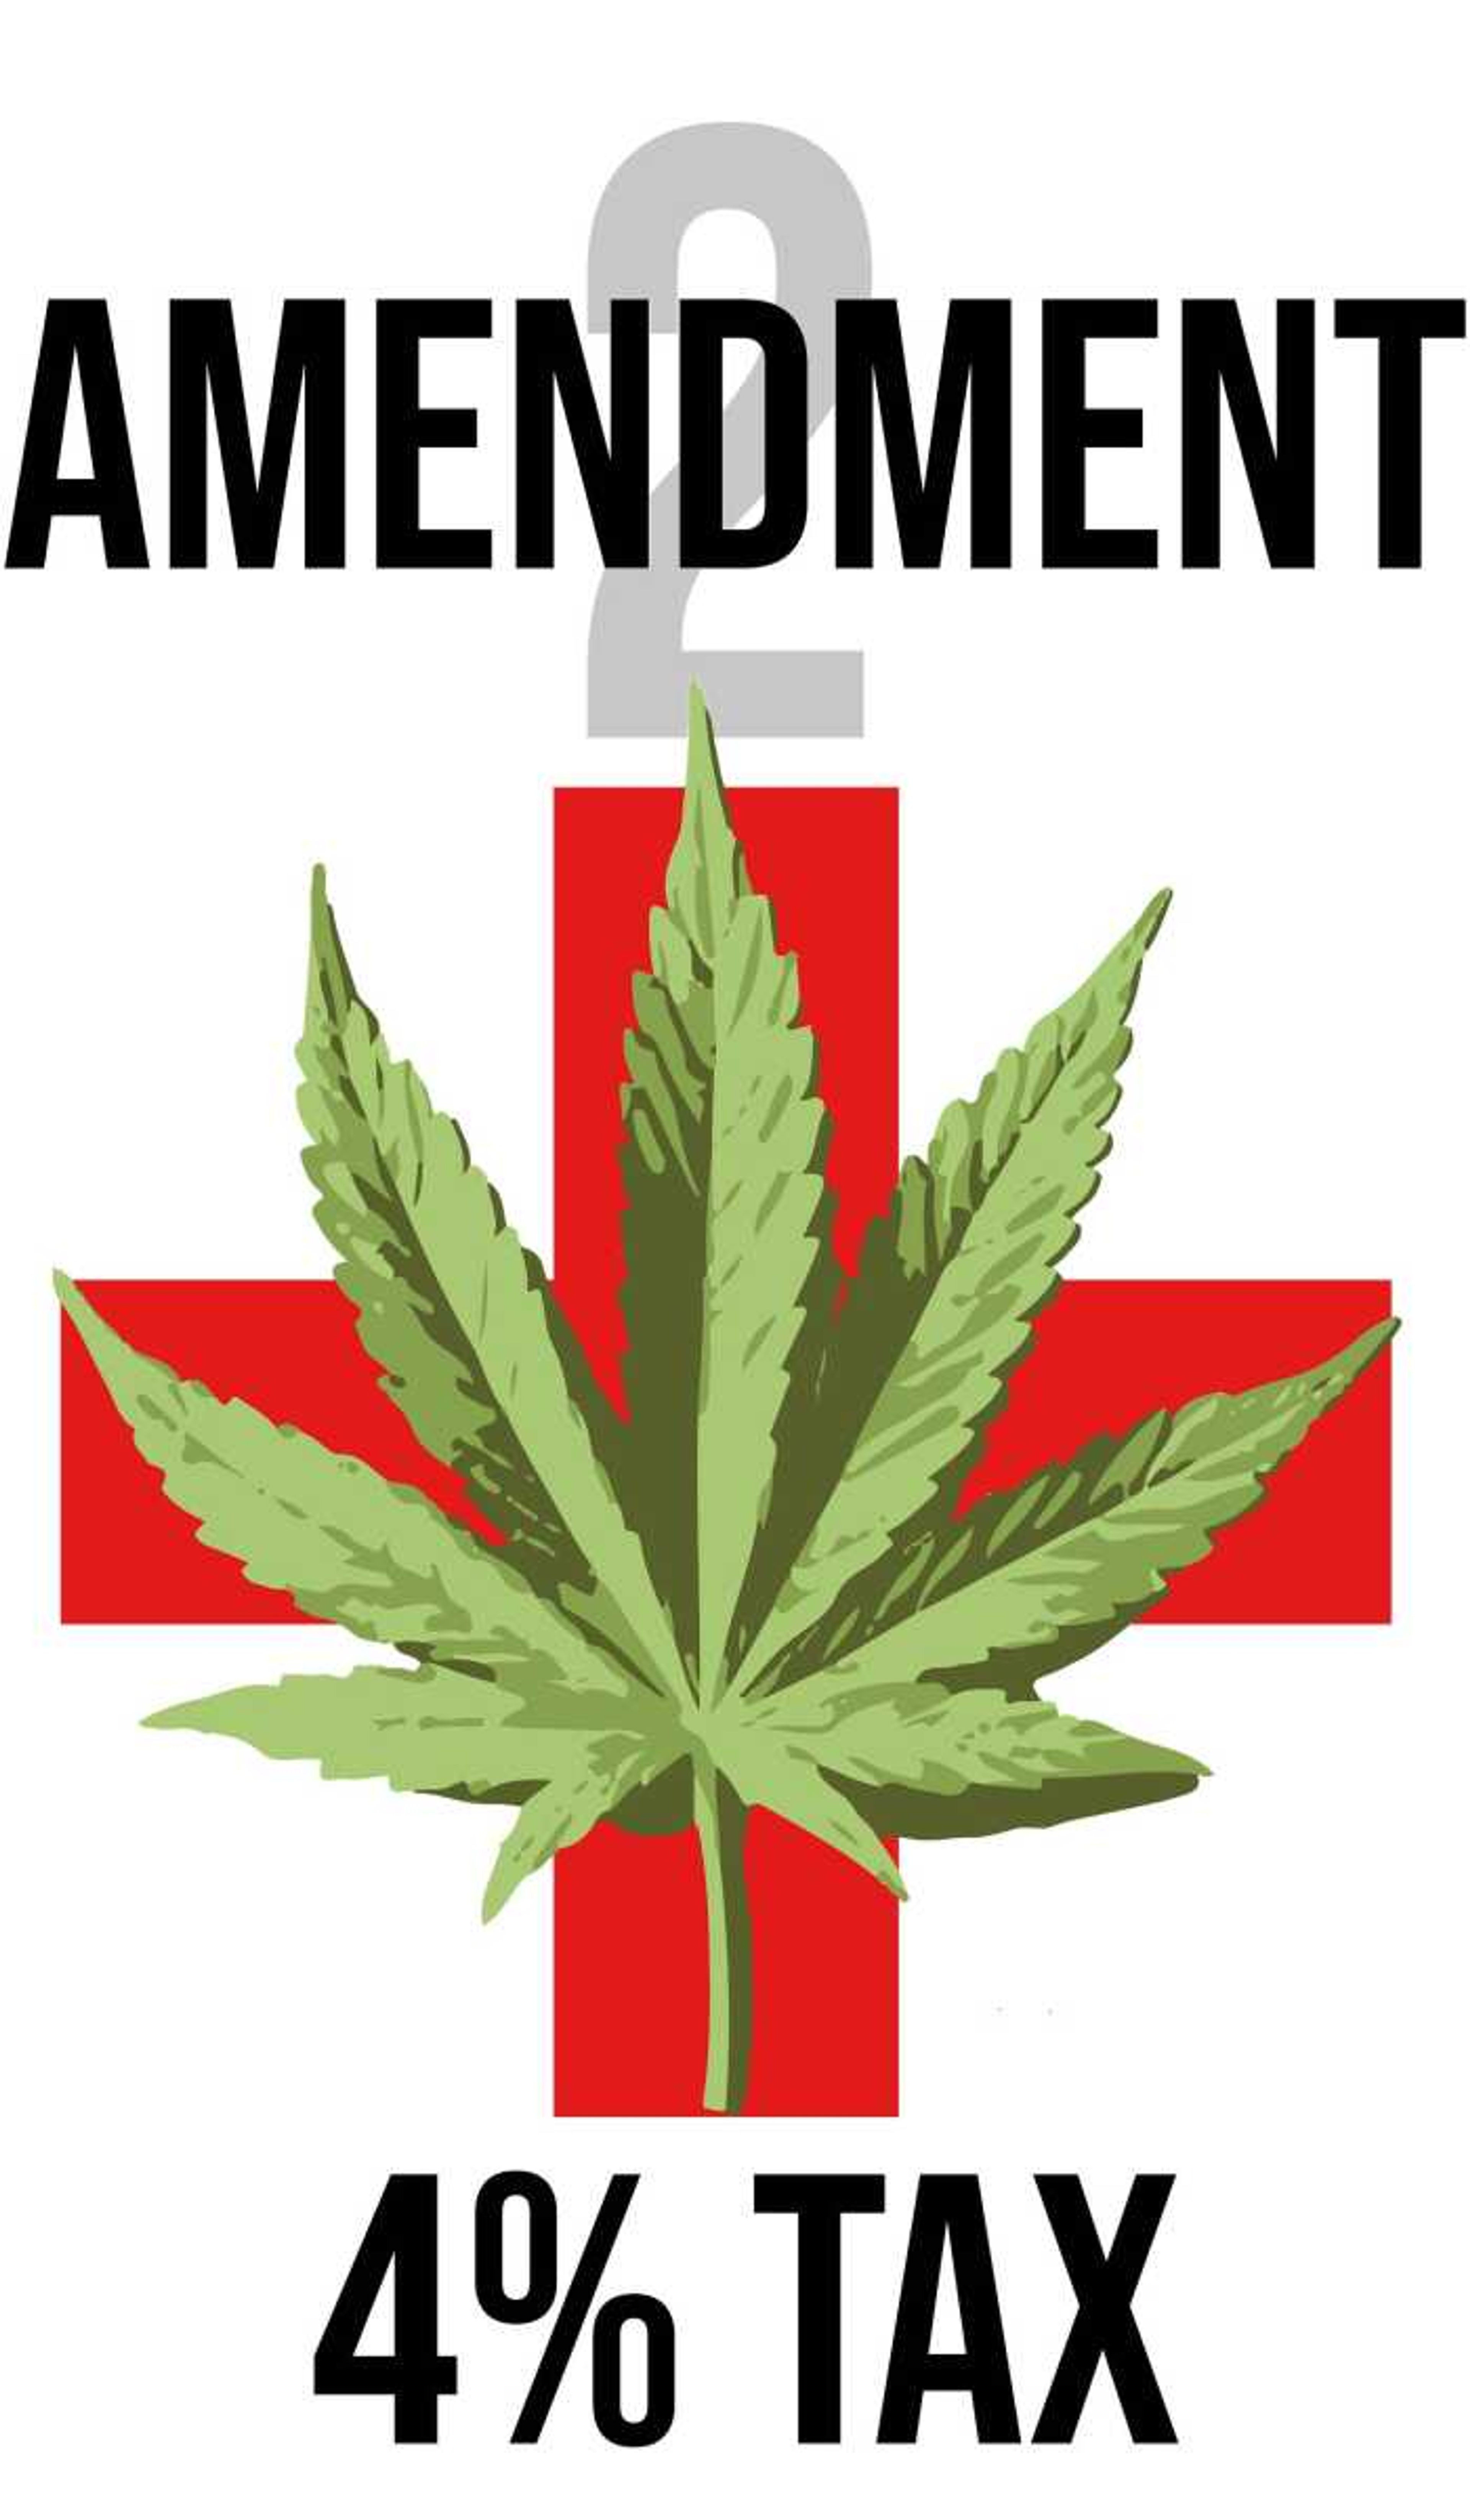 Missouri legalizes medical marijuana with Amendment 2